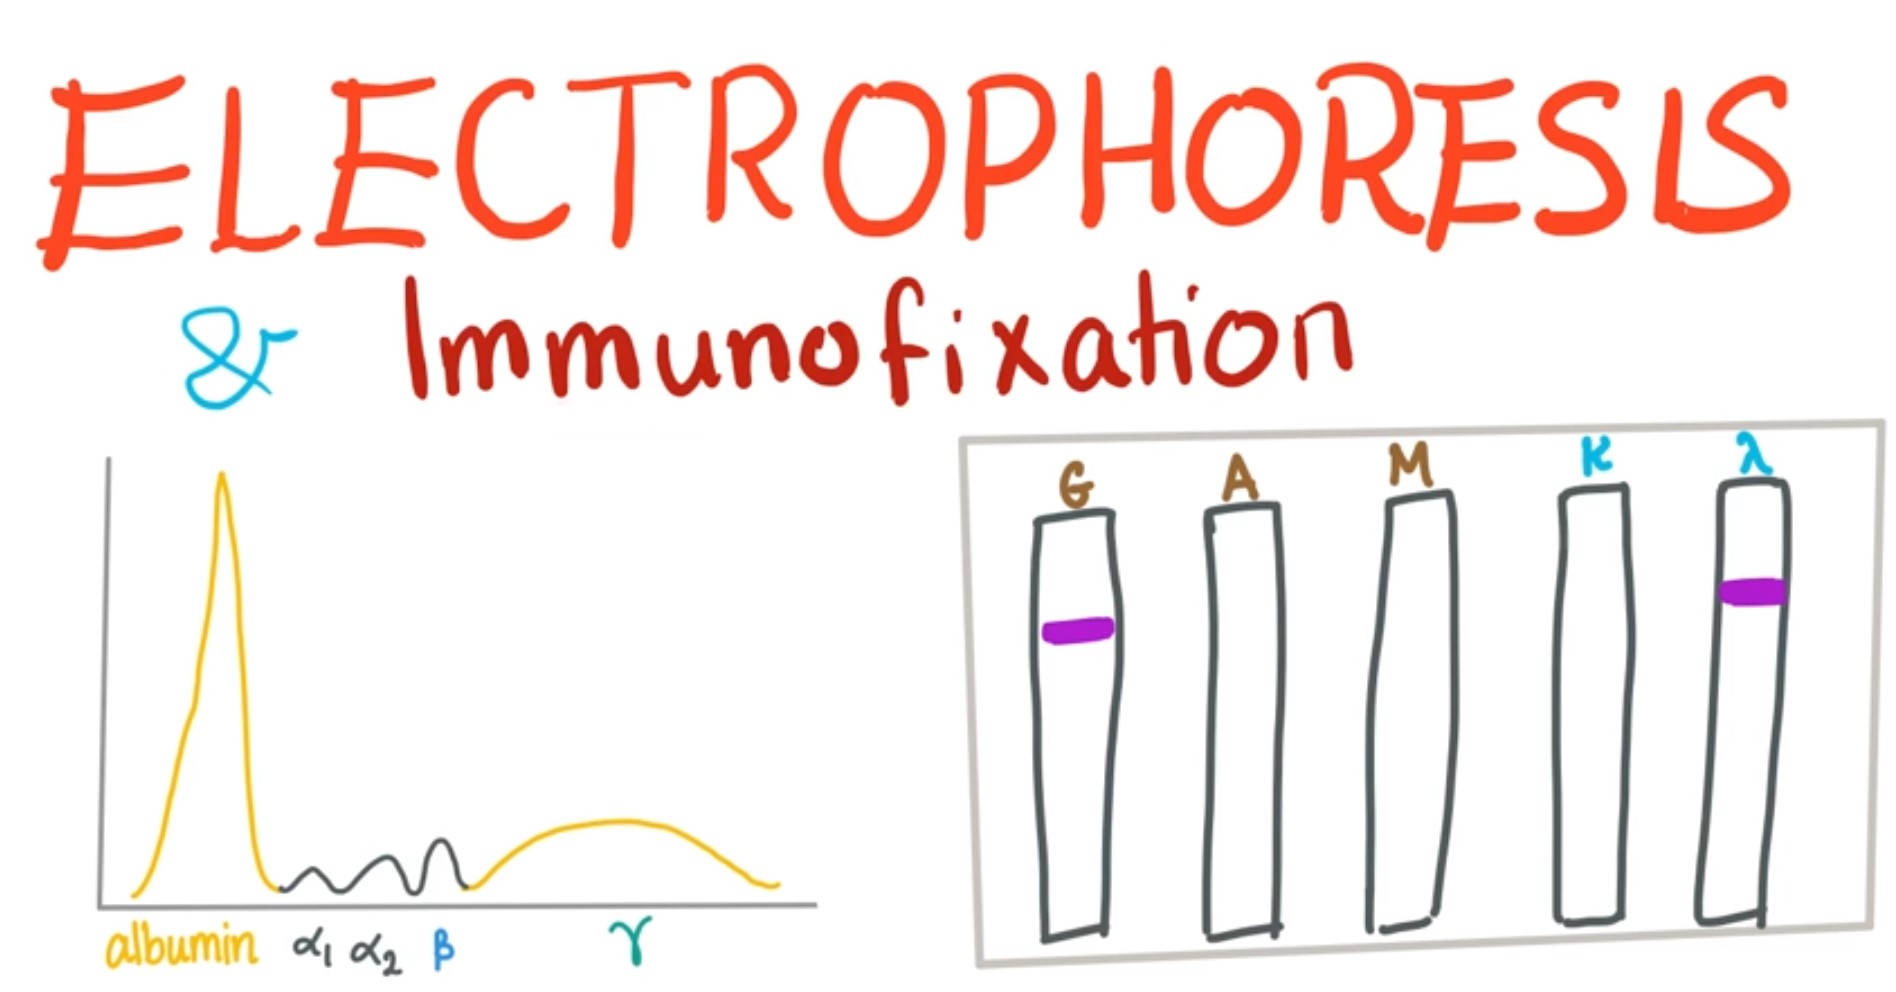 Serum Protein Electrophoresis And Immunofixation